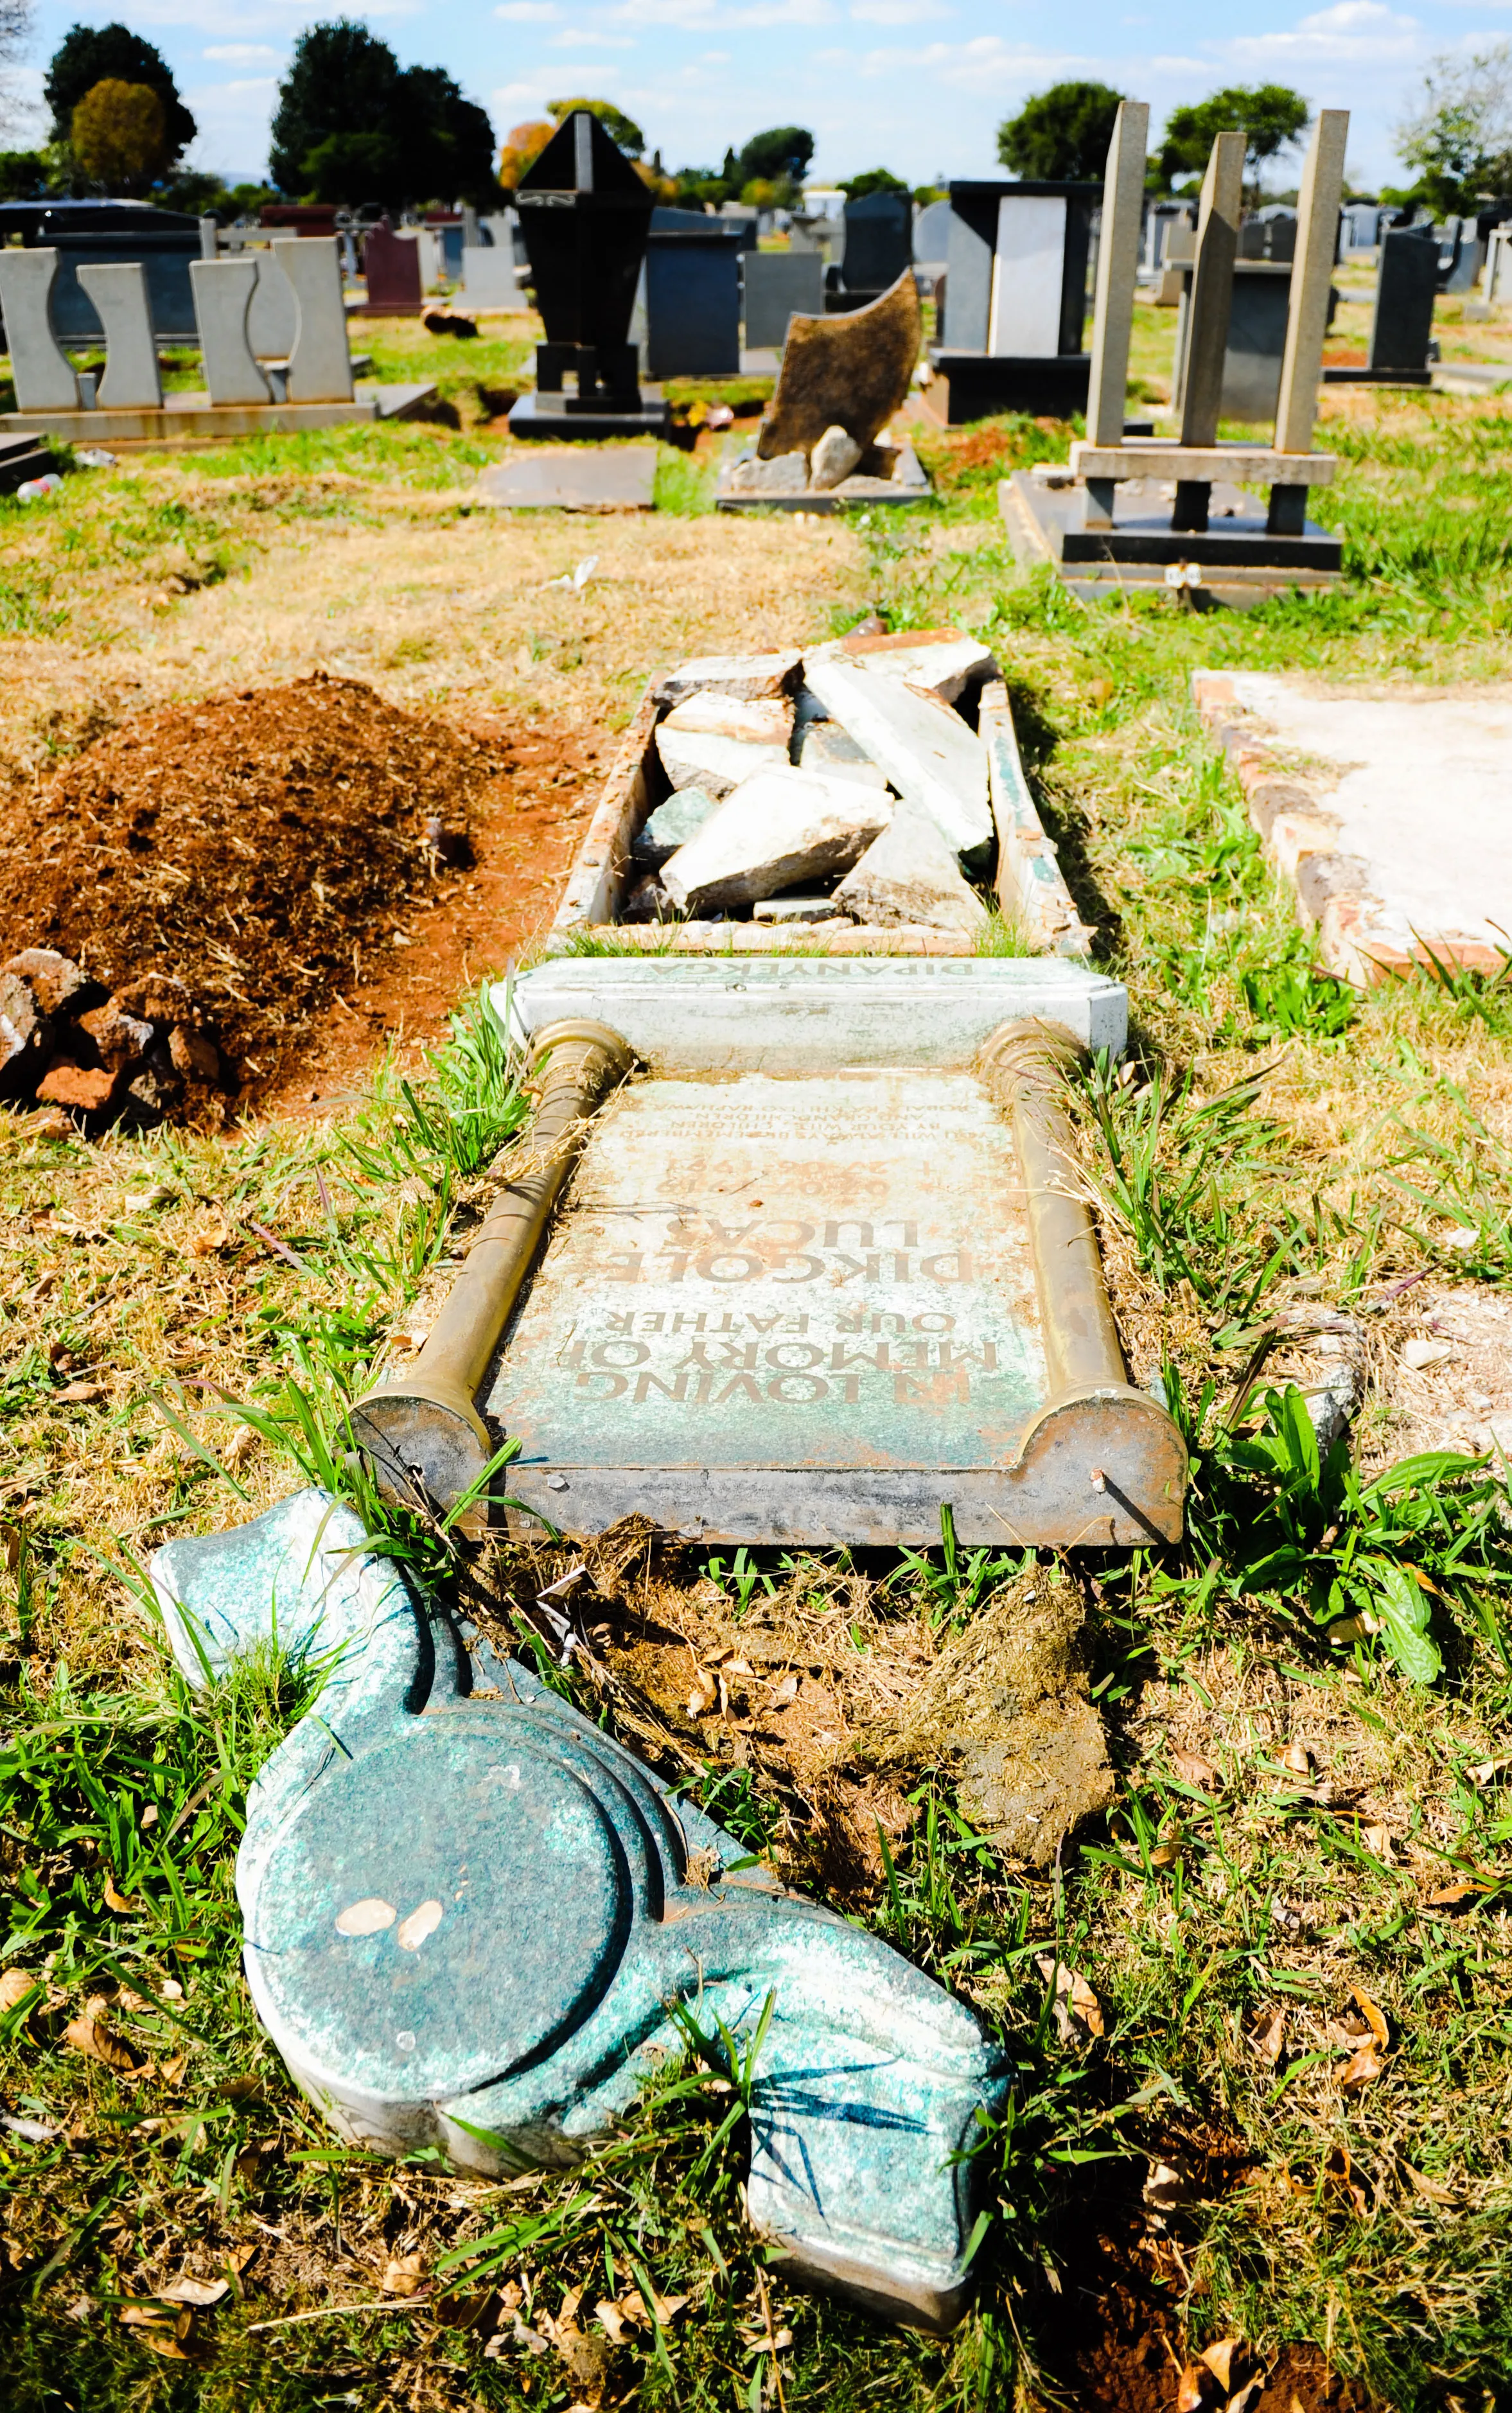 Broken graves lie strewn on the ground at Avalon cemetery